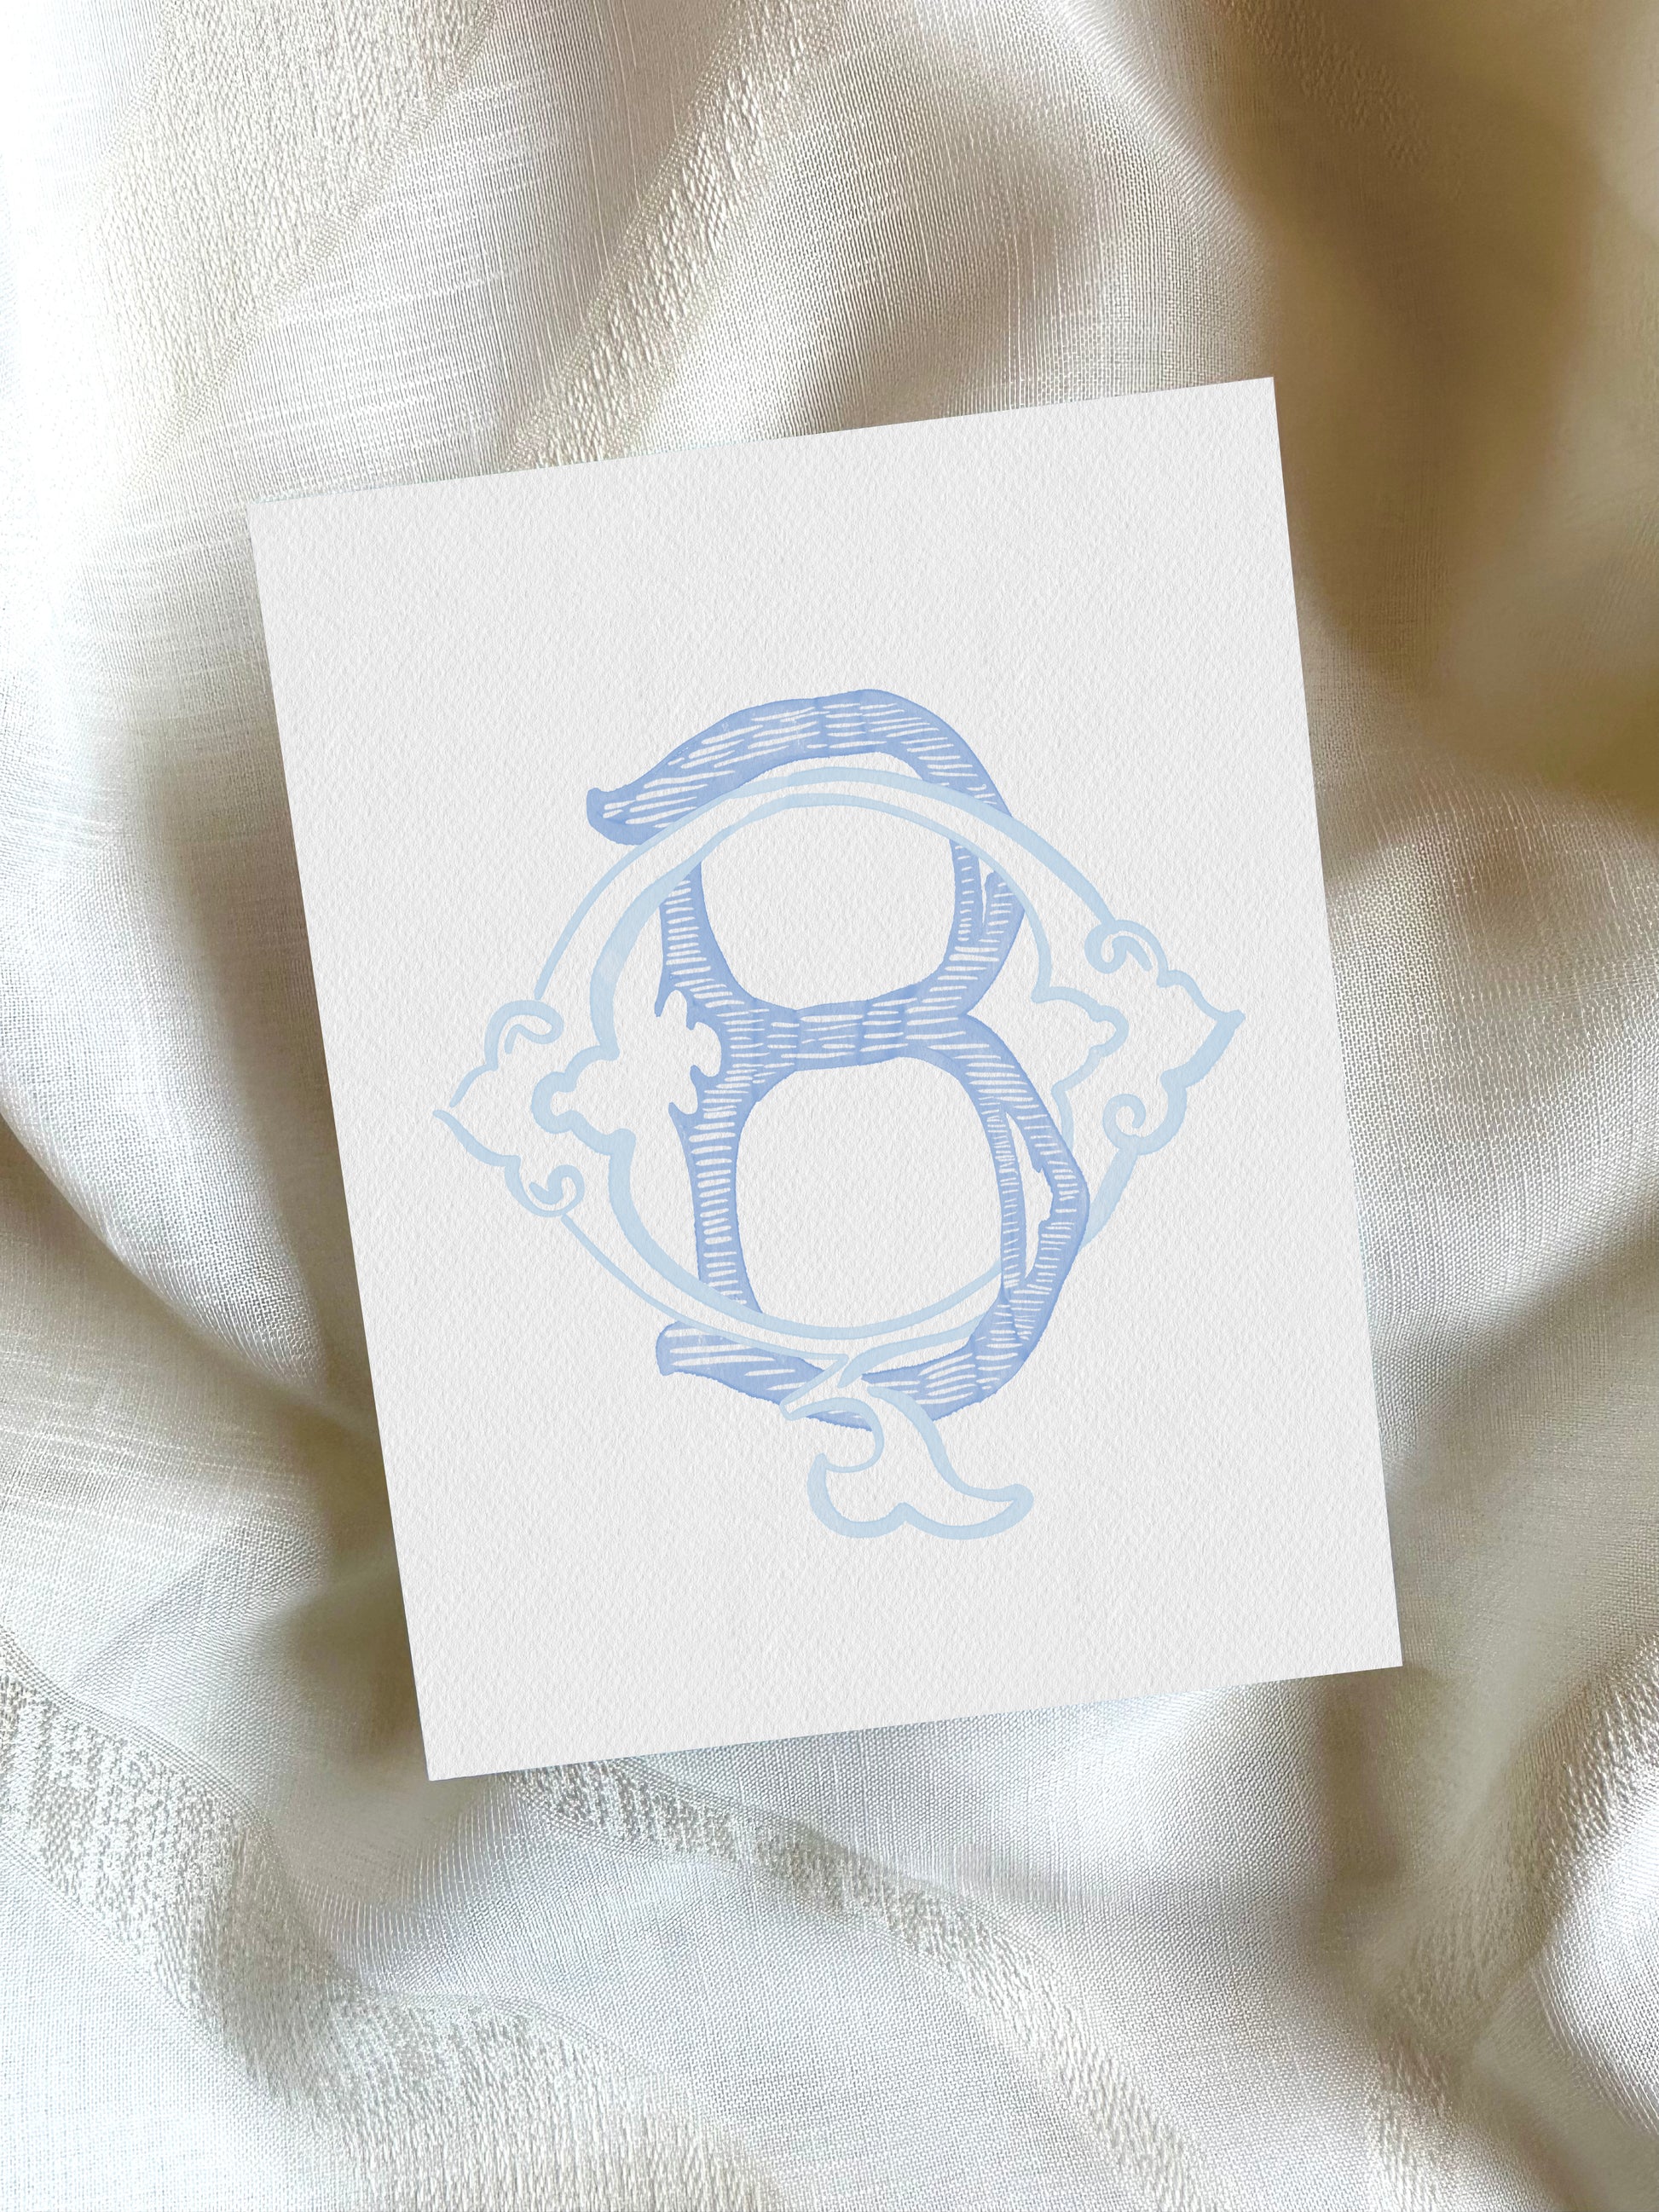 2 Letter Monogram with Letters BQ QB | Digital Download - Wedding Monogram SVG, Personal Logo, Wedding Logo for Wedding Invitations The Wedding Crest Lab